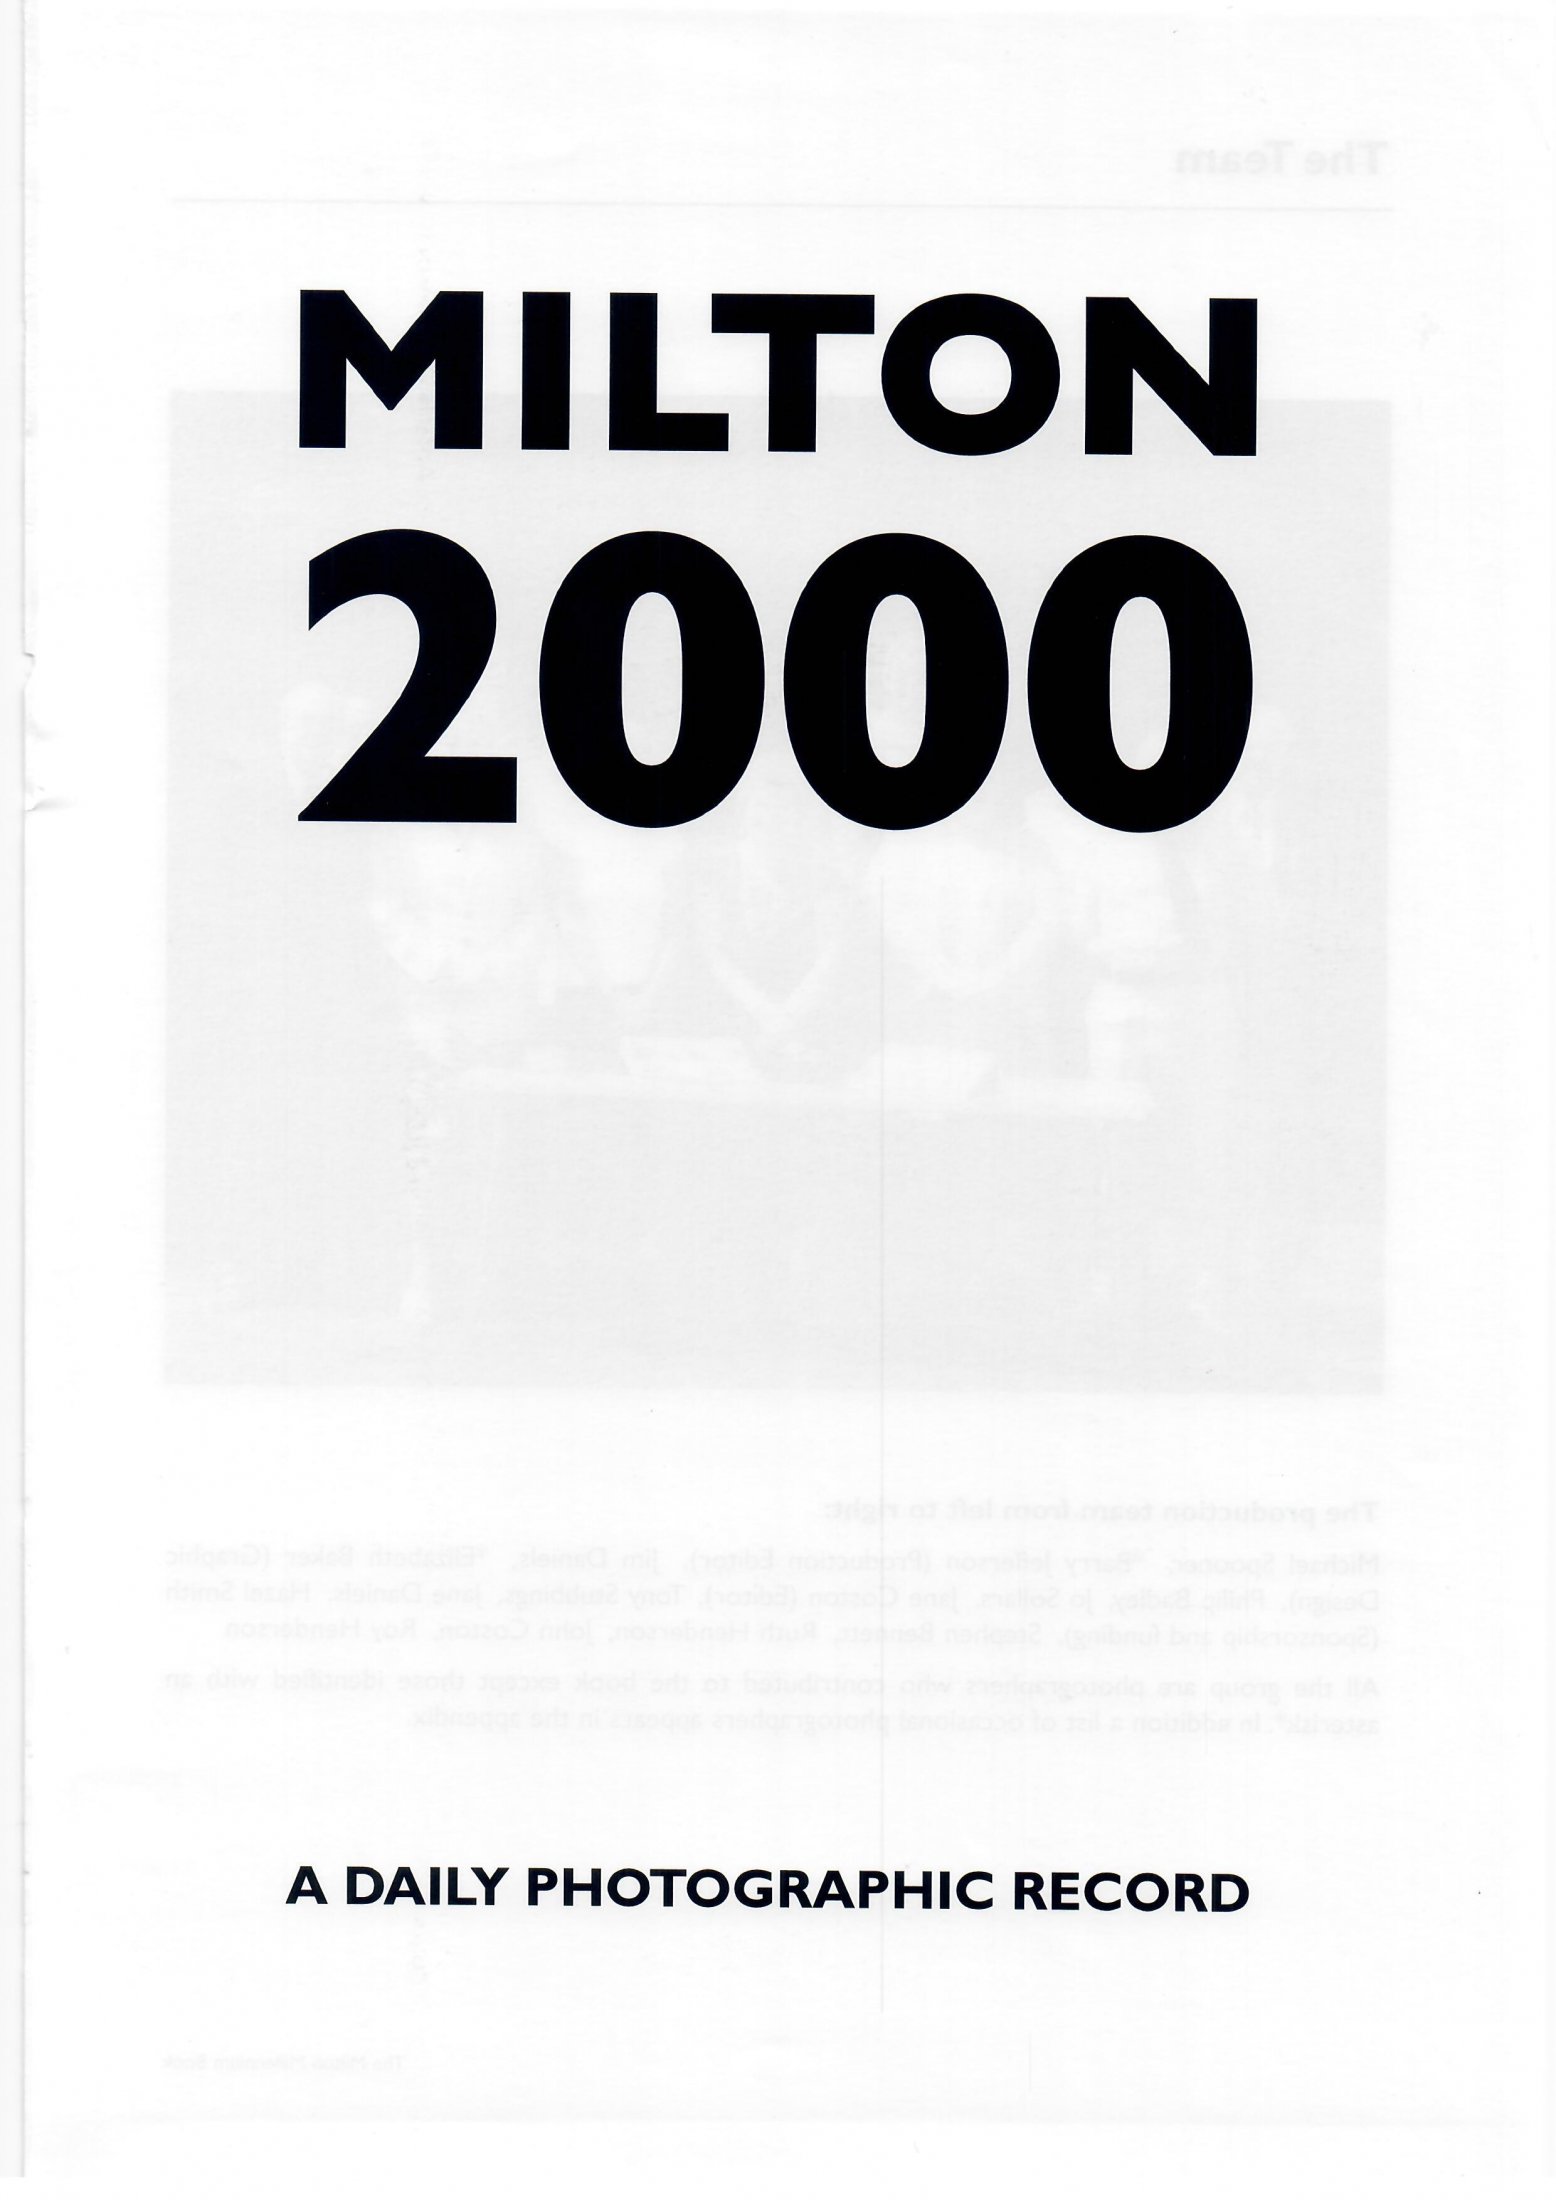 Milton 2000 Introduction0001